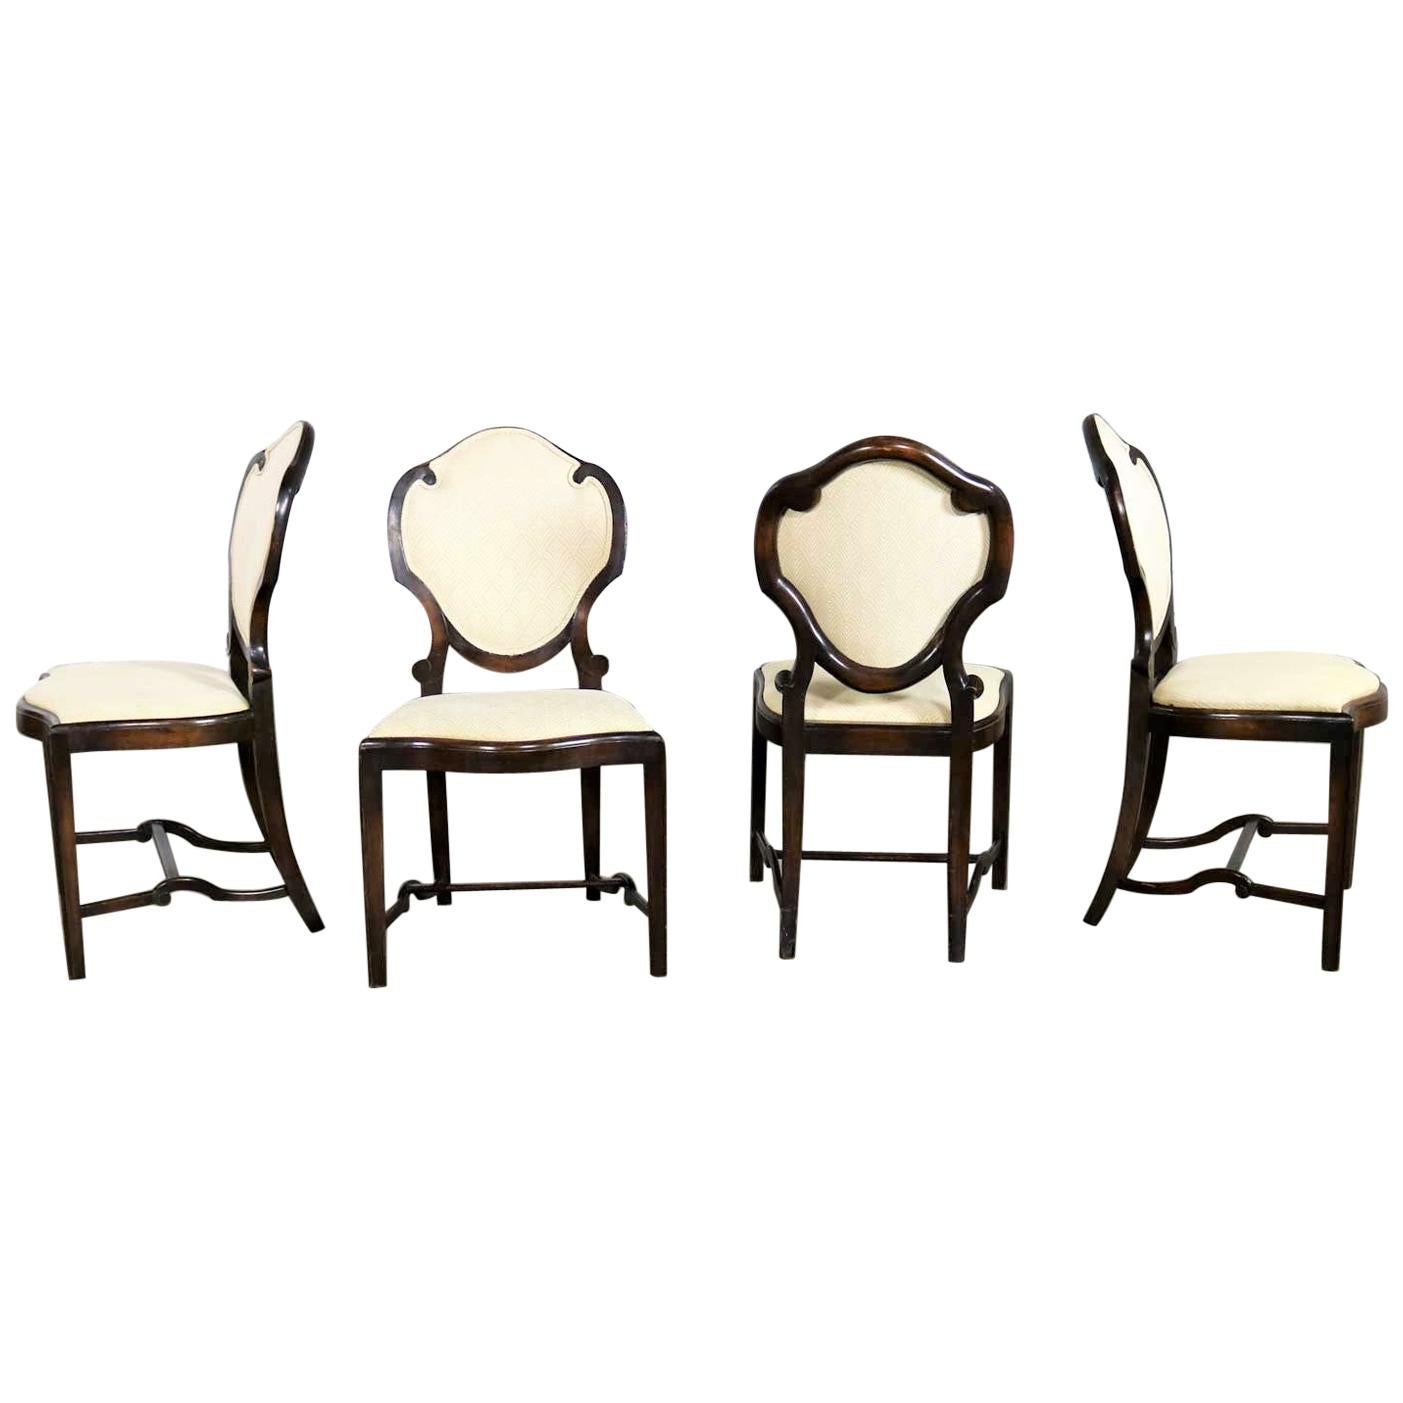 Antique Art Nouveau or Art Deco Shield Back Dining Chairs Set of Four For Sale